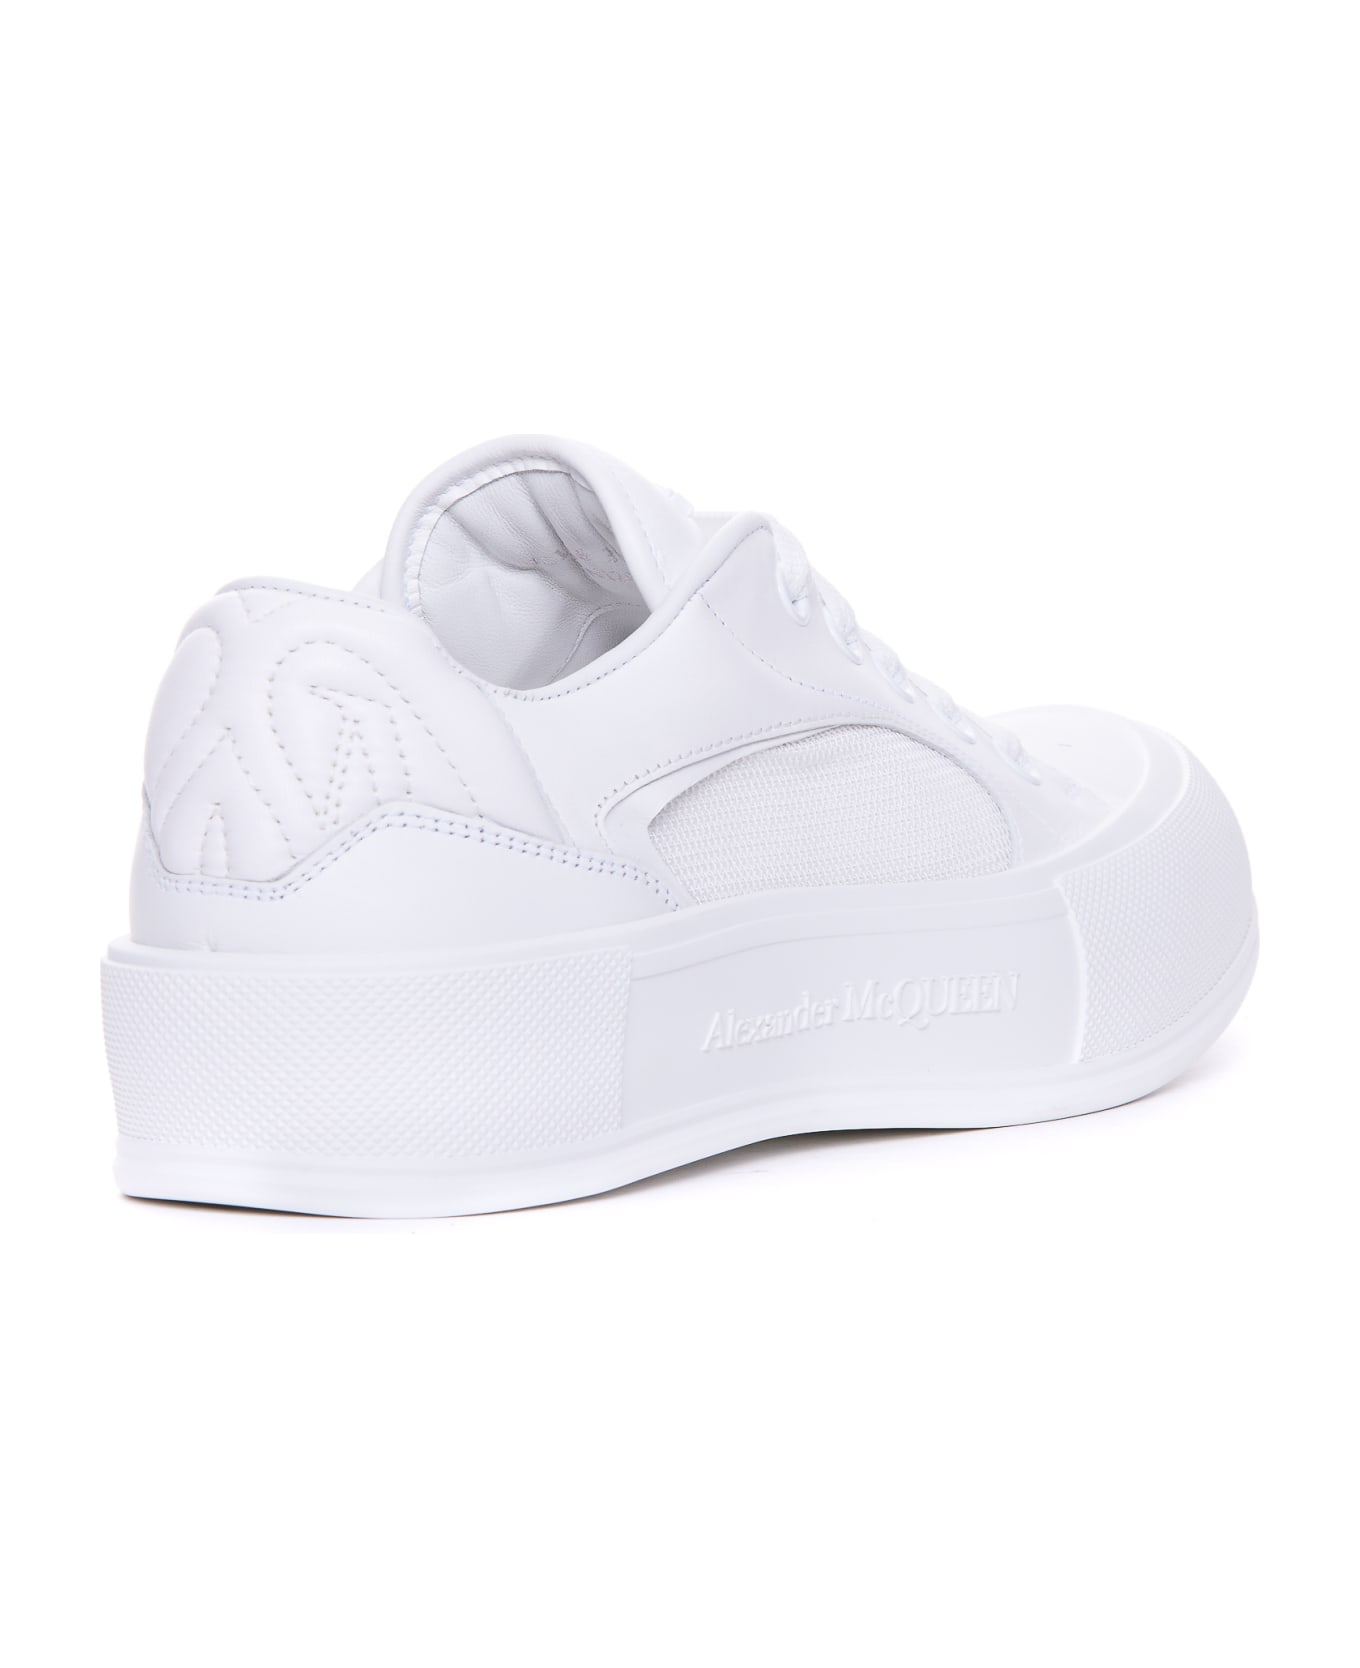 Alexander McQueen Plimsoll Sneakers - White White